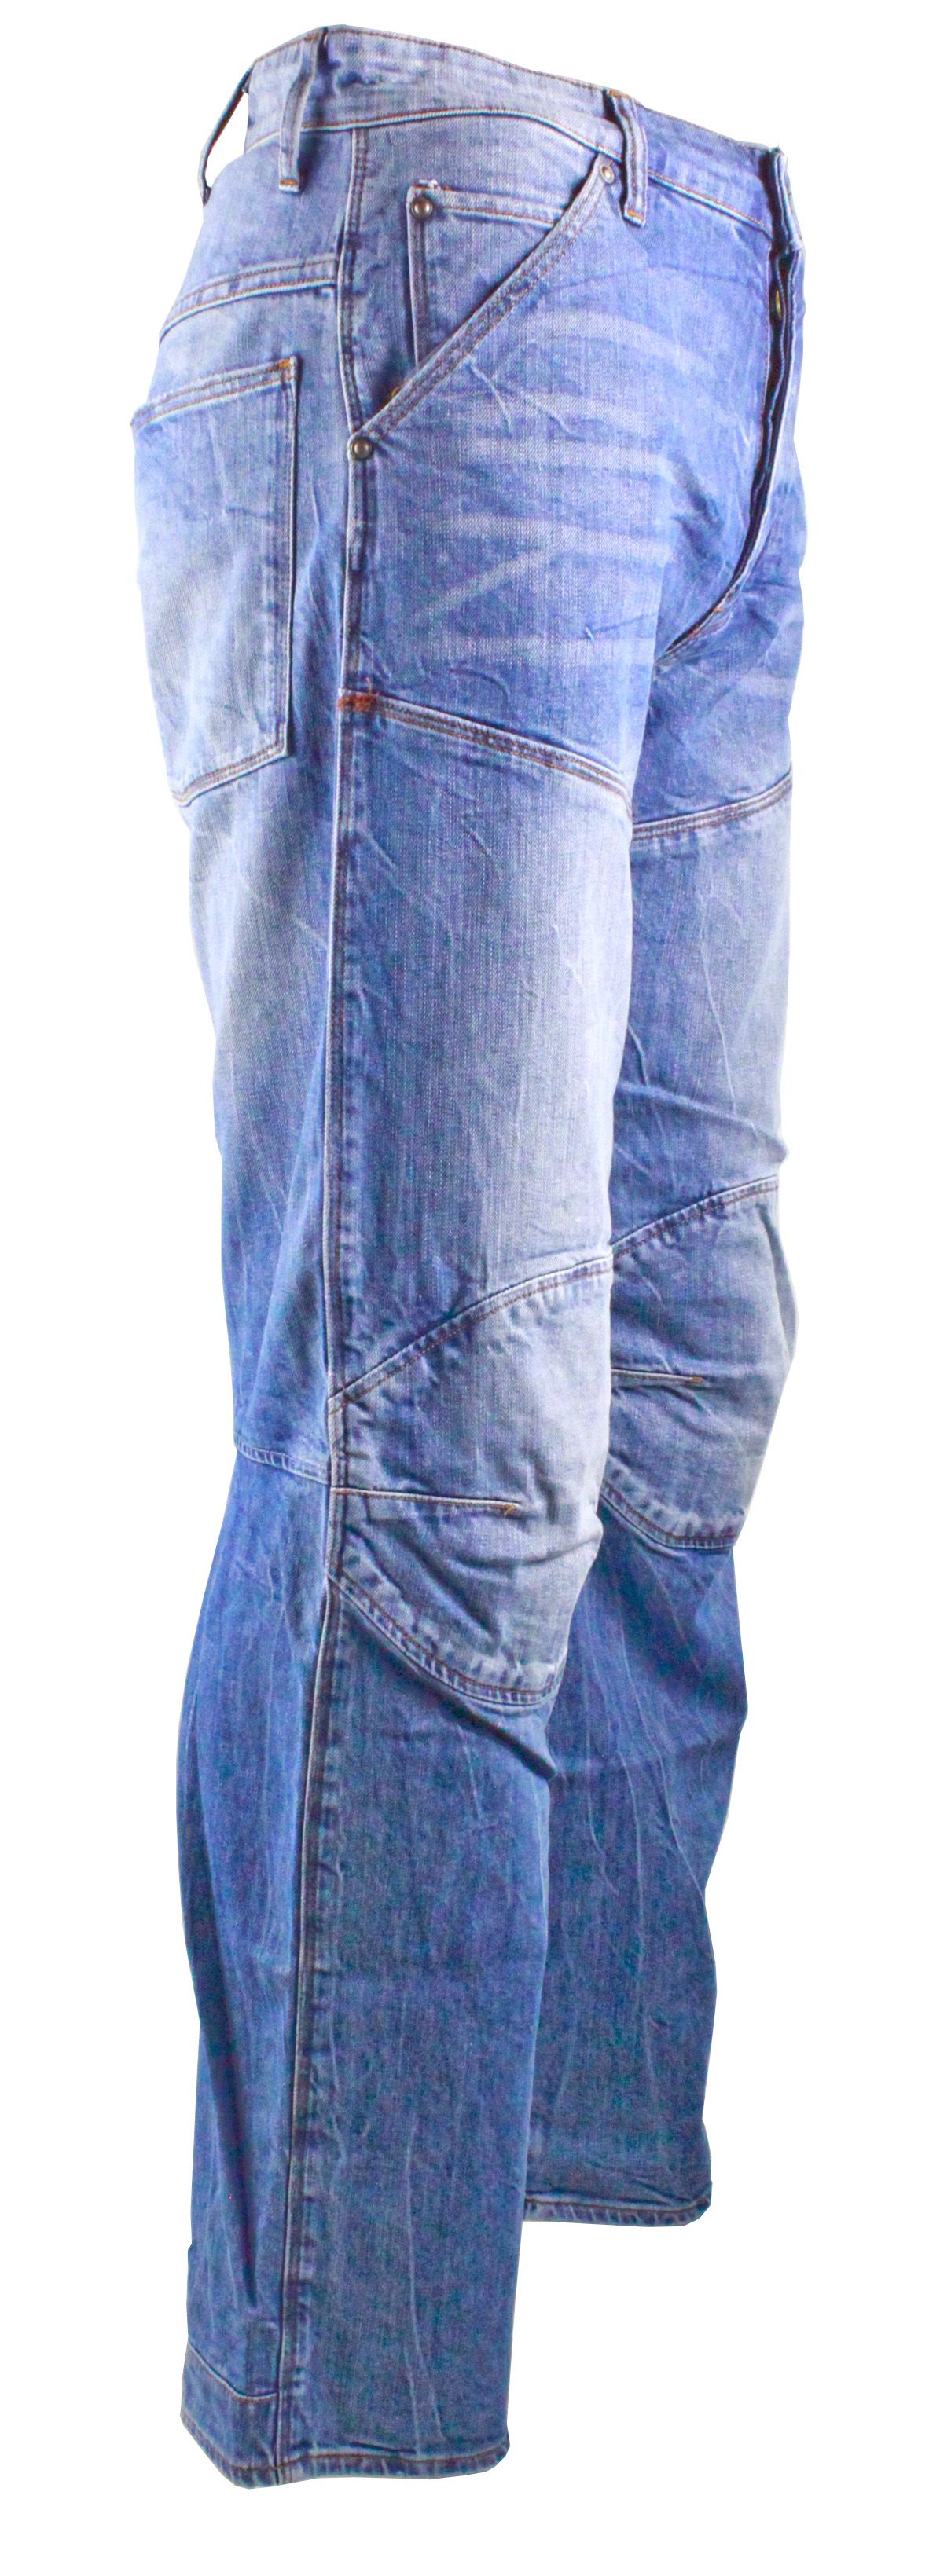 G-Star 5620 3D Stretch Med Aged  Hadron Stretch Denim Jeans. 98% Cotton 2% Elastane Stretch Denim. G-Star Elwood Style. Tapered Leg. Button Fly. Additional Hems